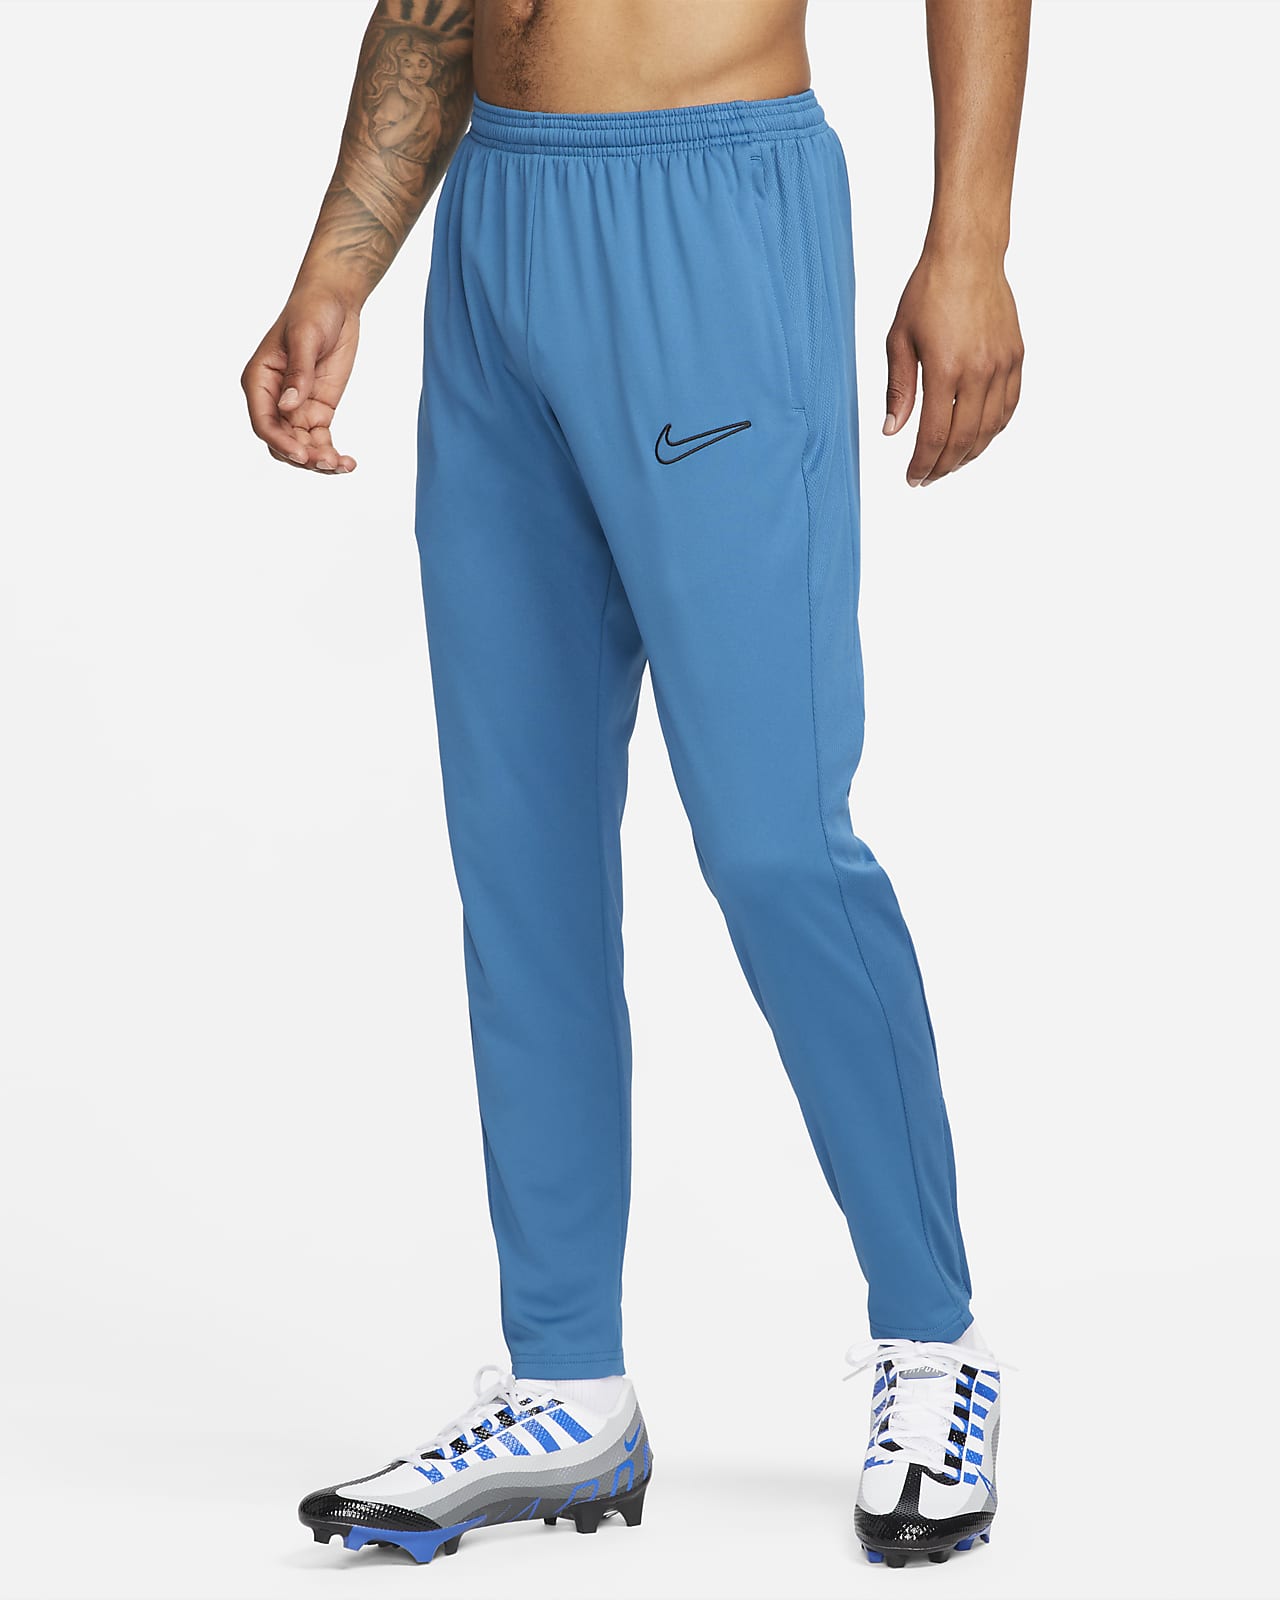 Pants de fútbol Dri-FIT para hombre Nike Academy.